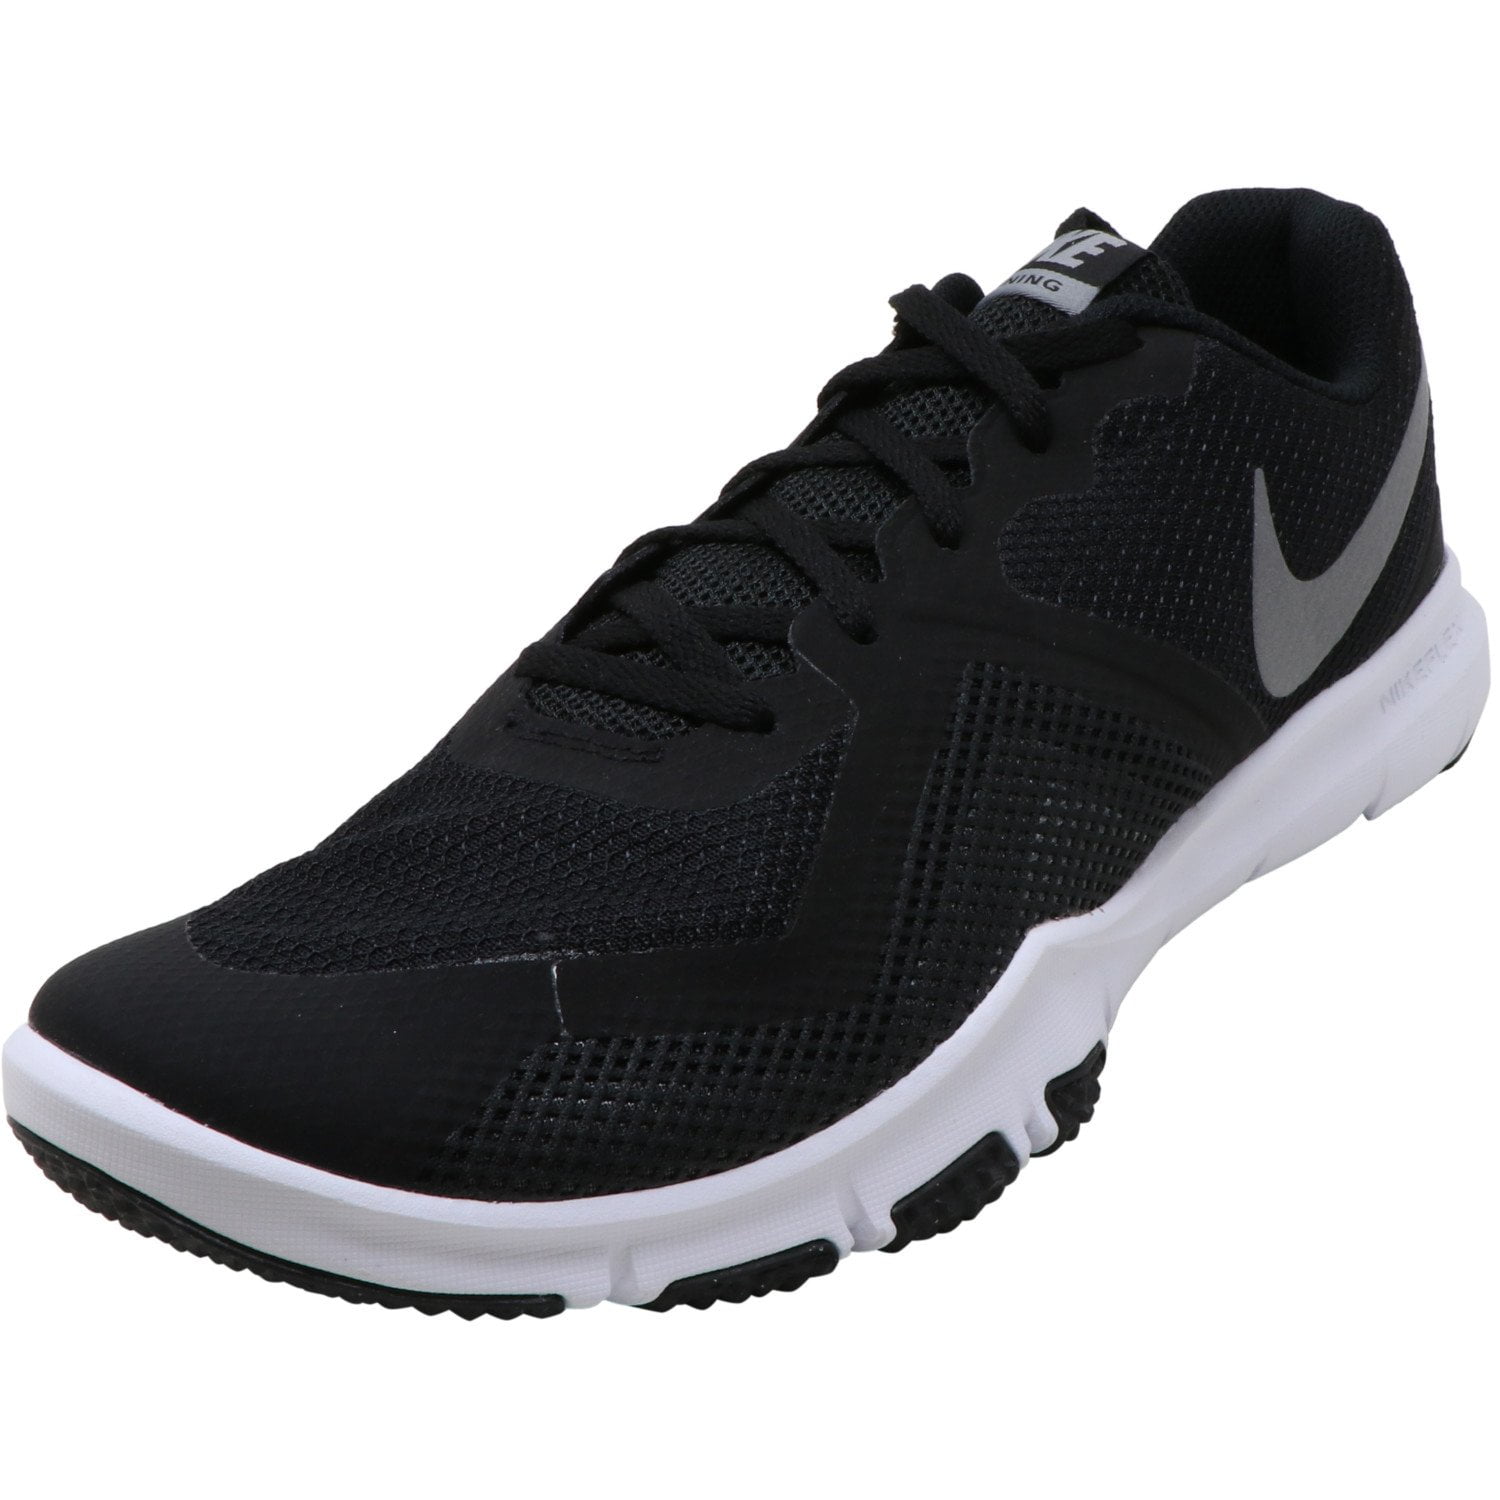 Nike Men's Flex Control Ii Black / Metallic Cool Grey Dark Ankle-High ...